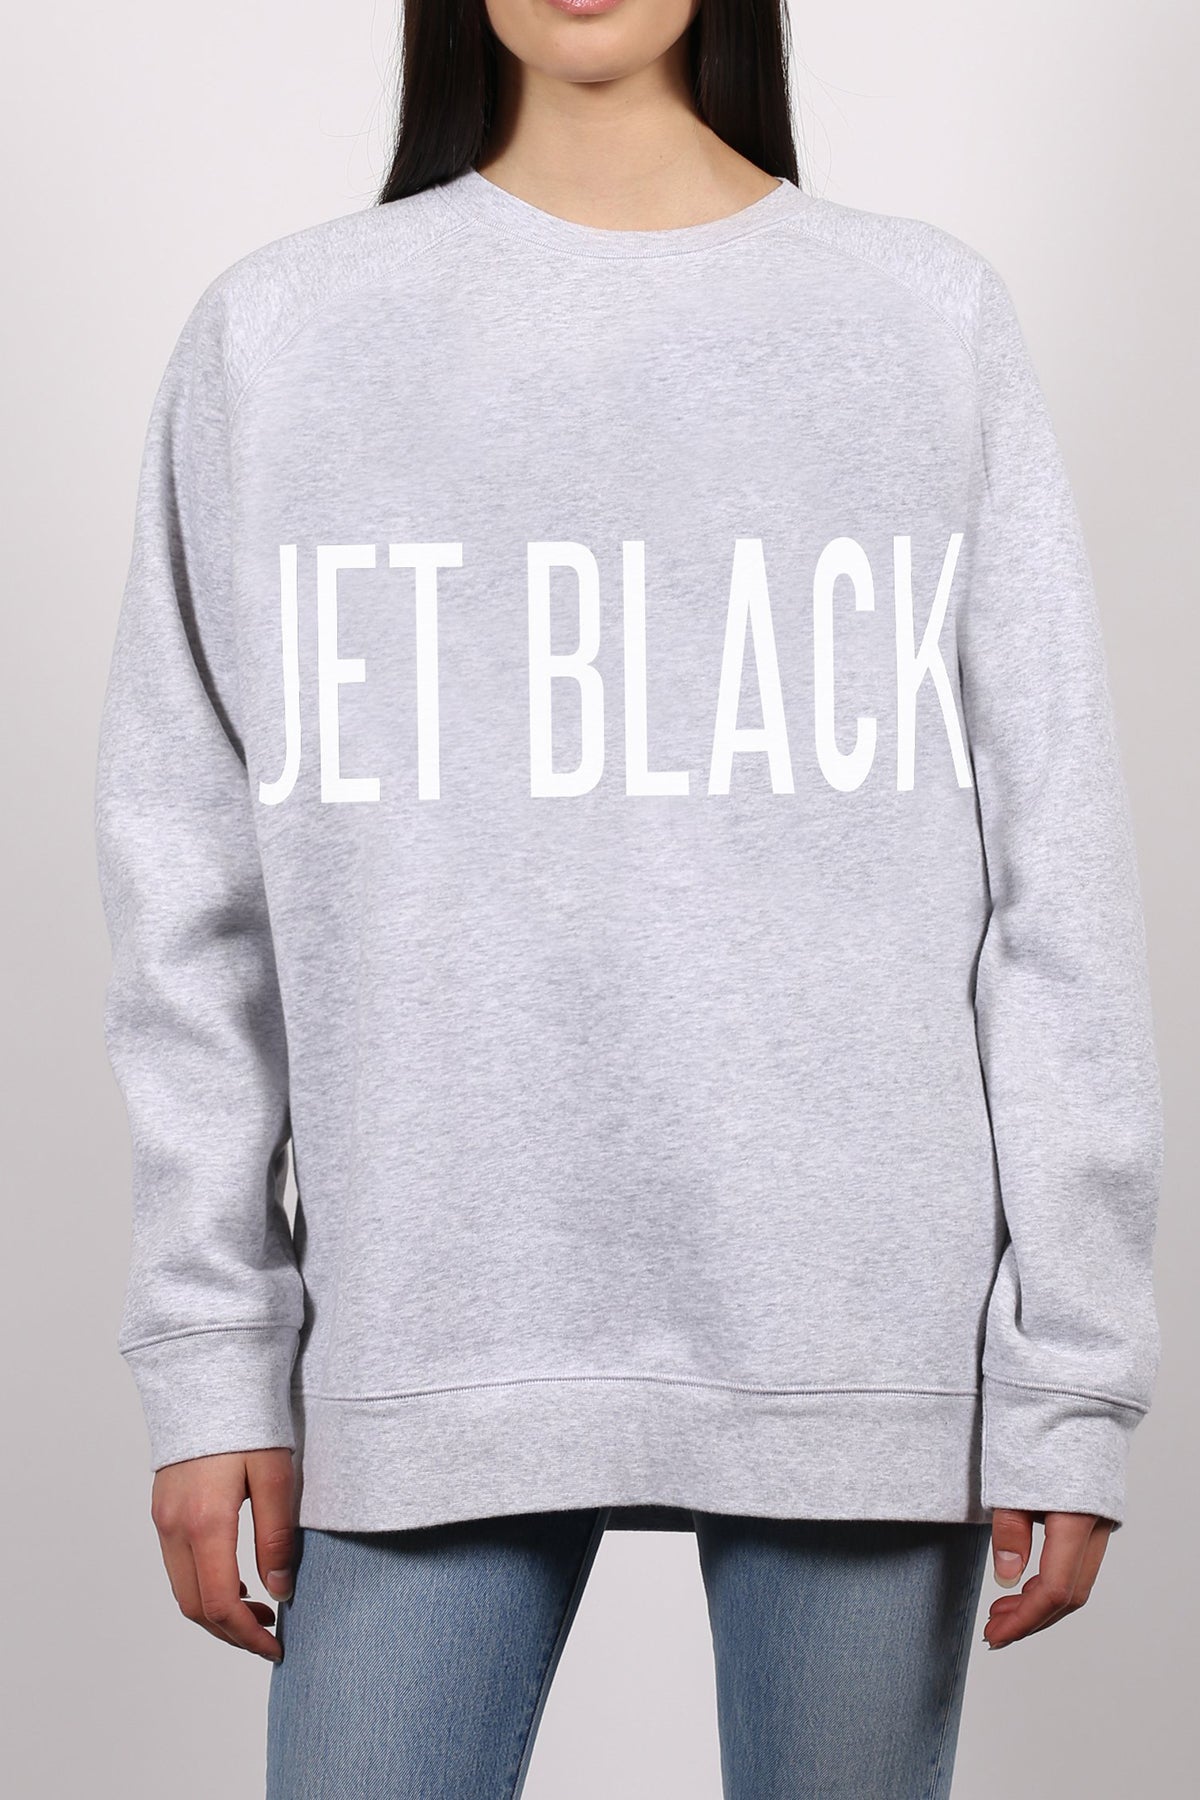 The "JET BLACK" Big Sister Crew Neck Sweatshirt | Pebble Grey